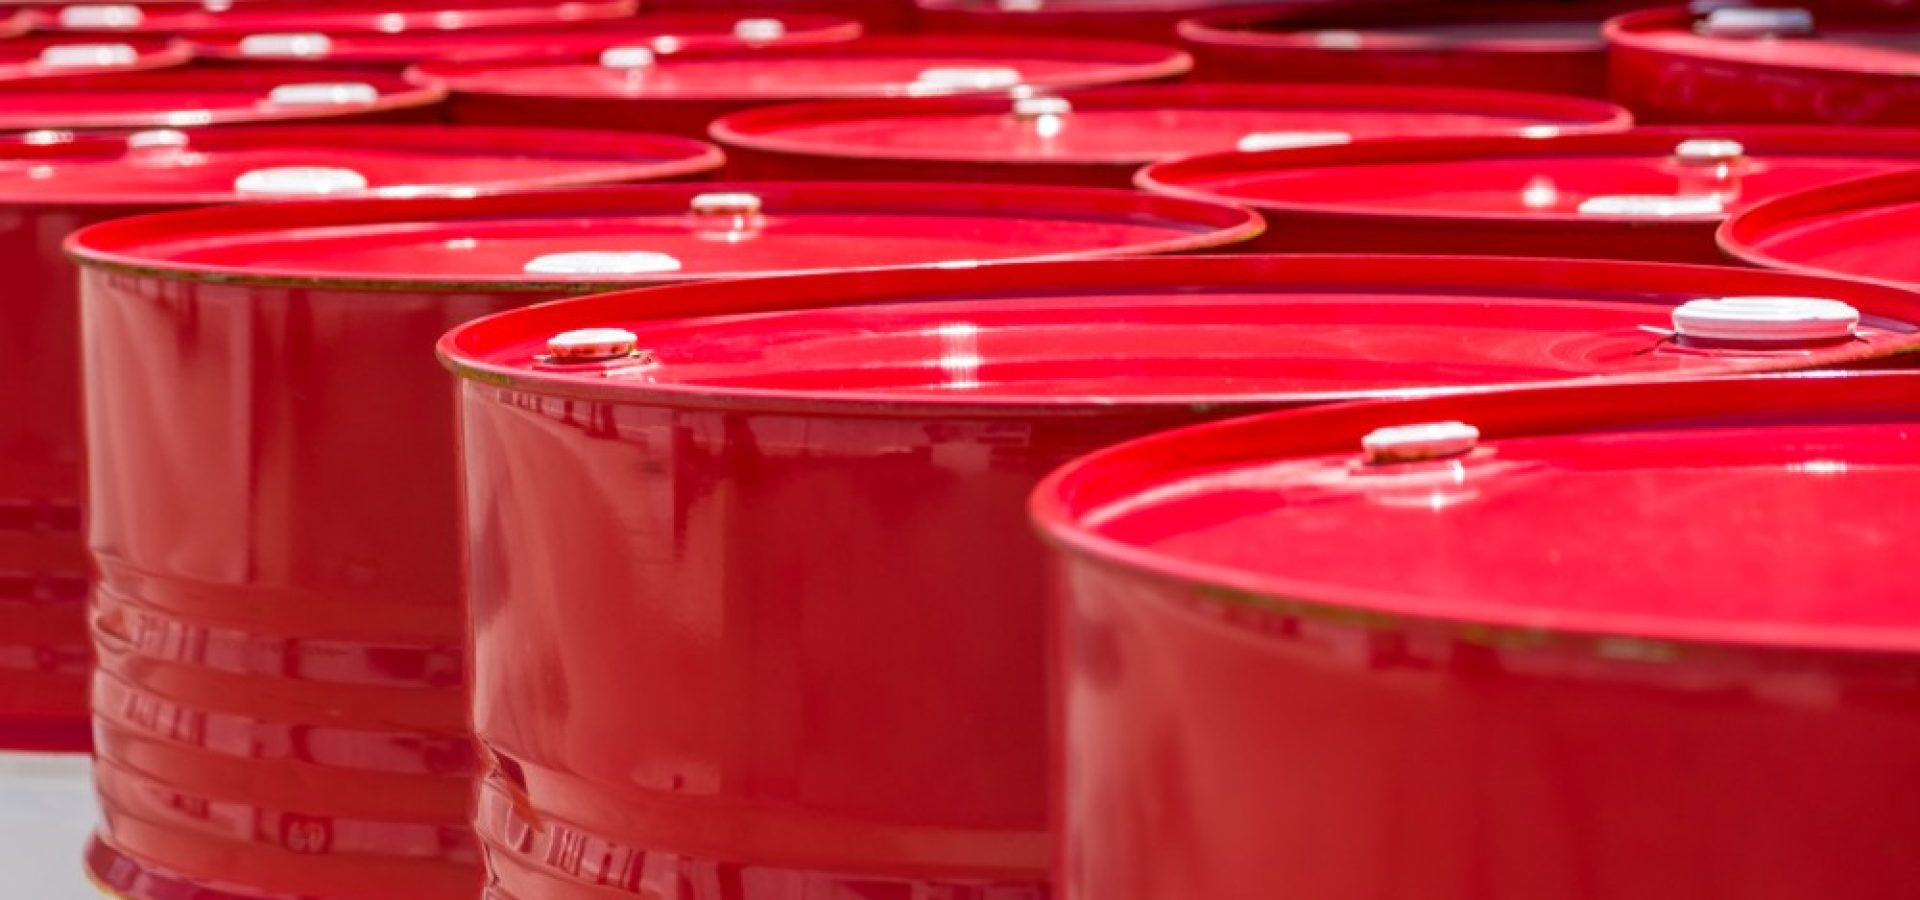 Wibest – Oil and petroleum: Red crude oil barrels.